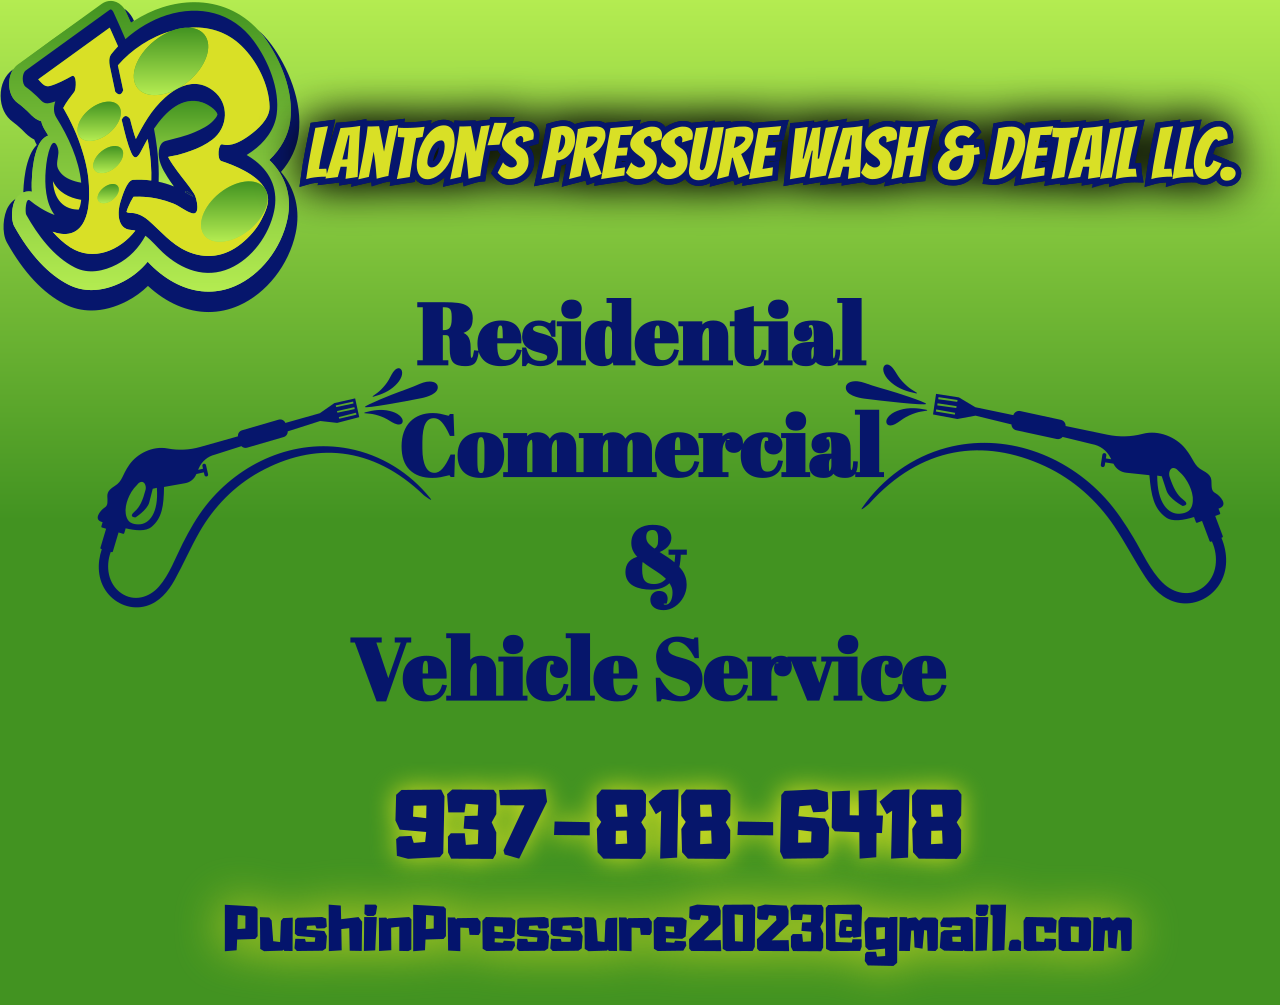 Blanton’s Pressure Wash & Detail LLC.'s web page